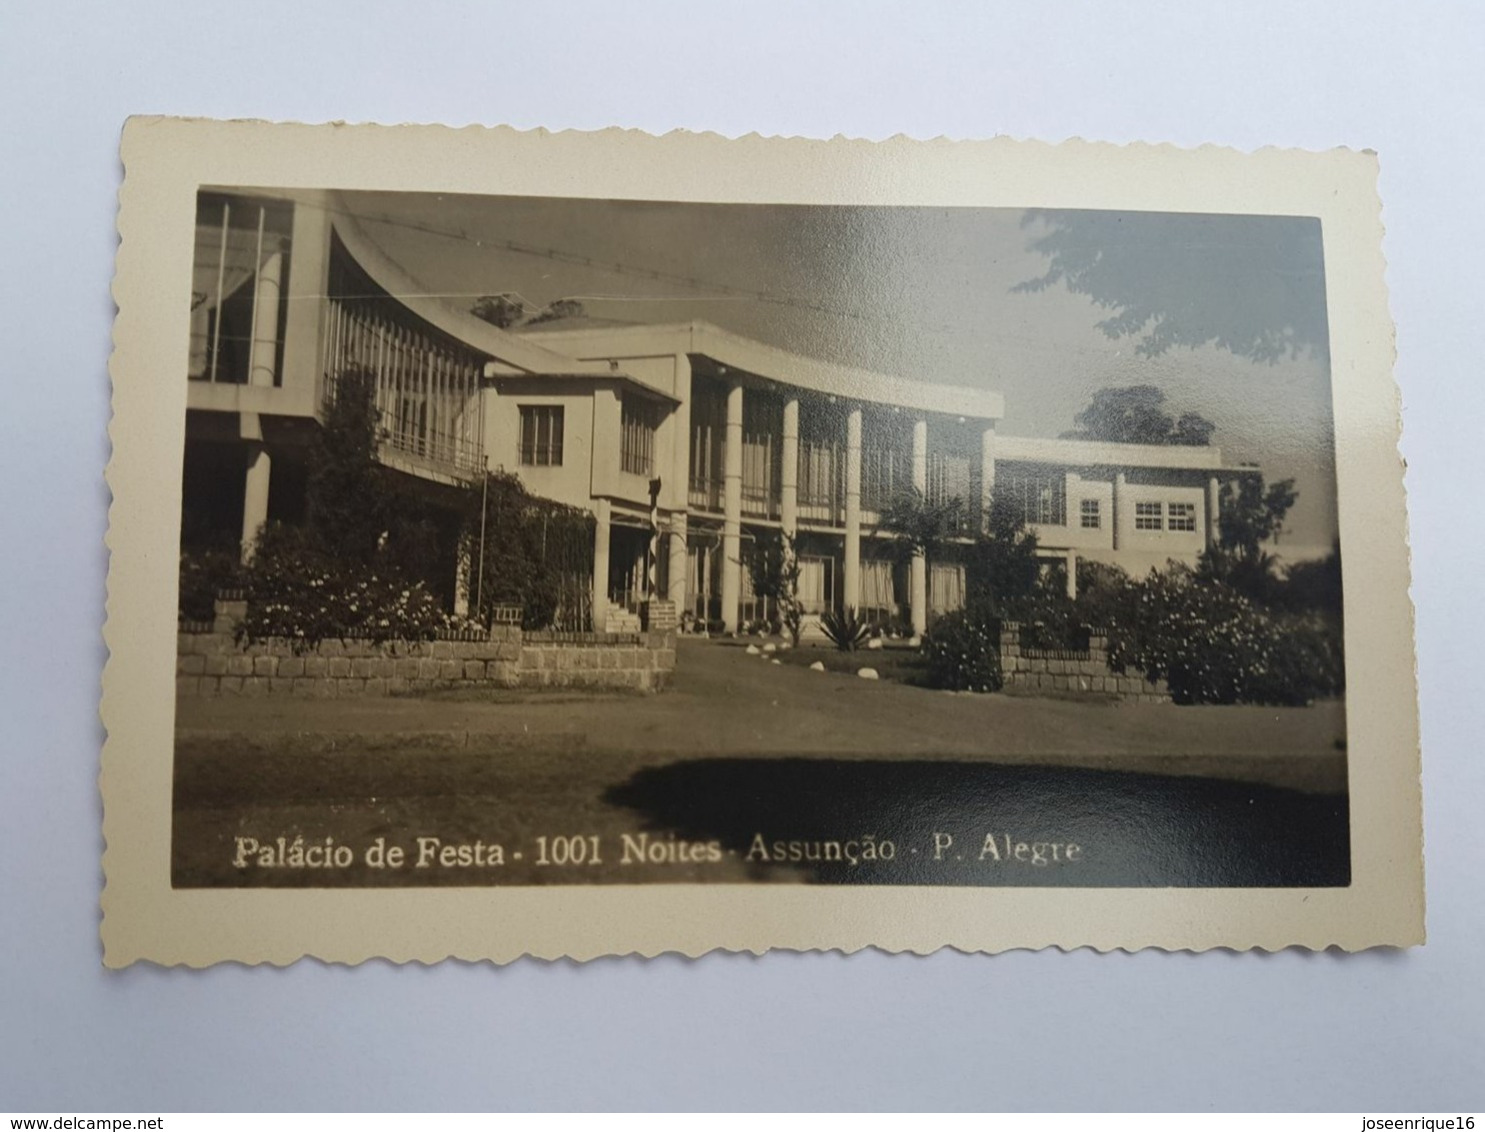 PALACIO DE FESTA 1001 NOITES ASSUNCAO PORTO ALEGRE BRASIL - Porto Alegre